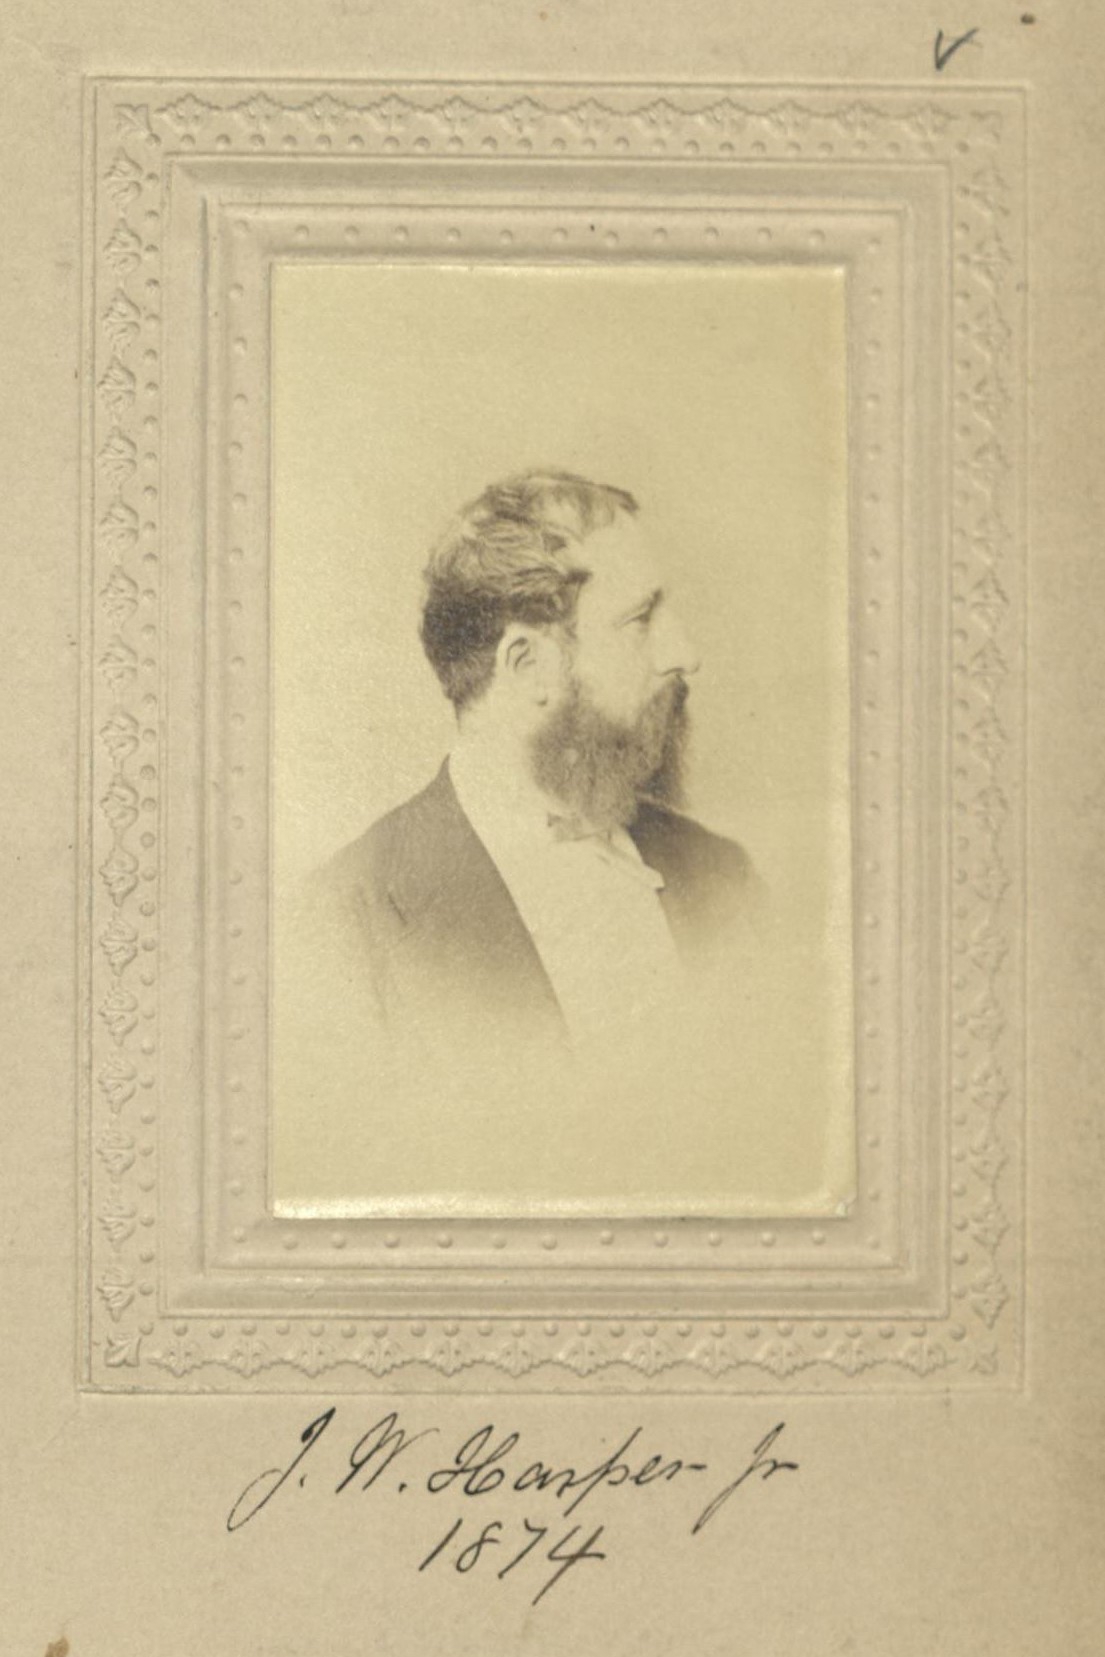 Member portrait of Joseph W. Harper